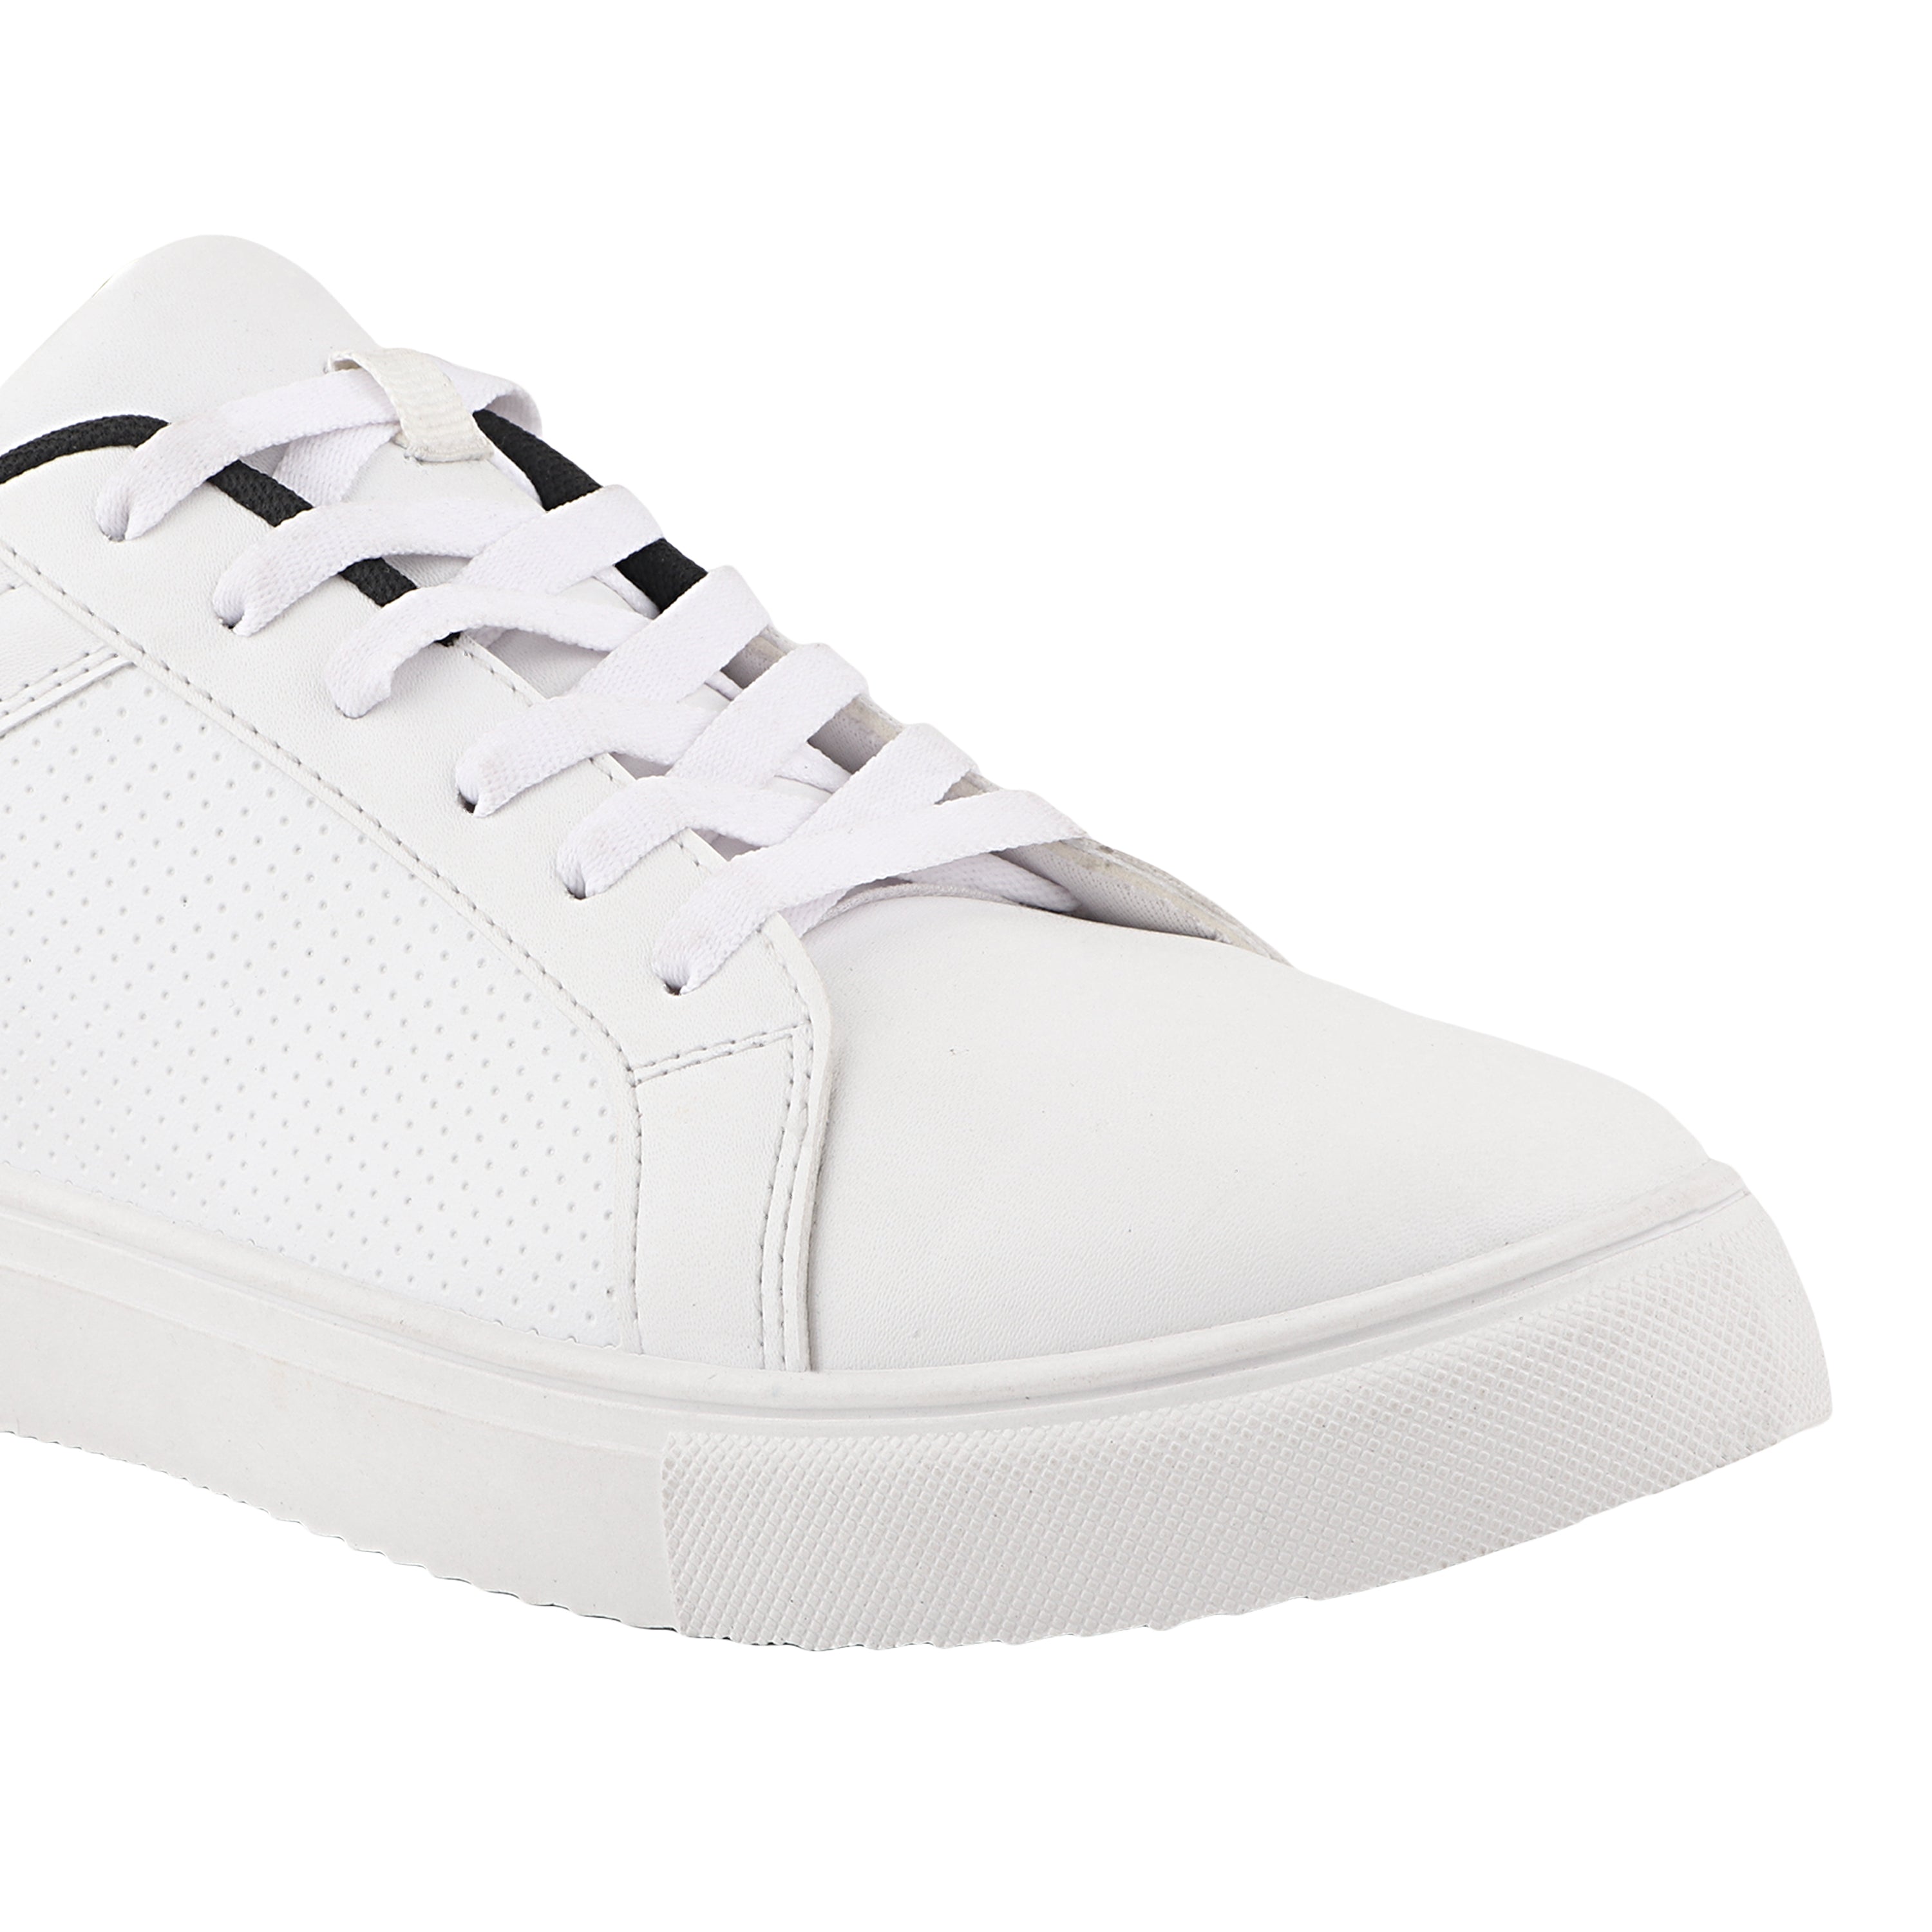 Sneak sneakers white